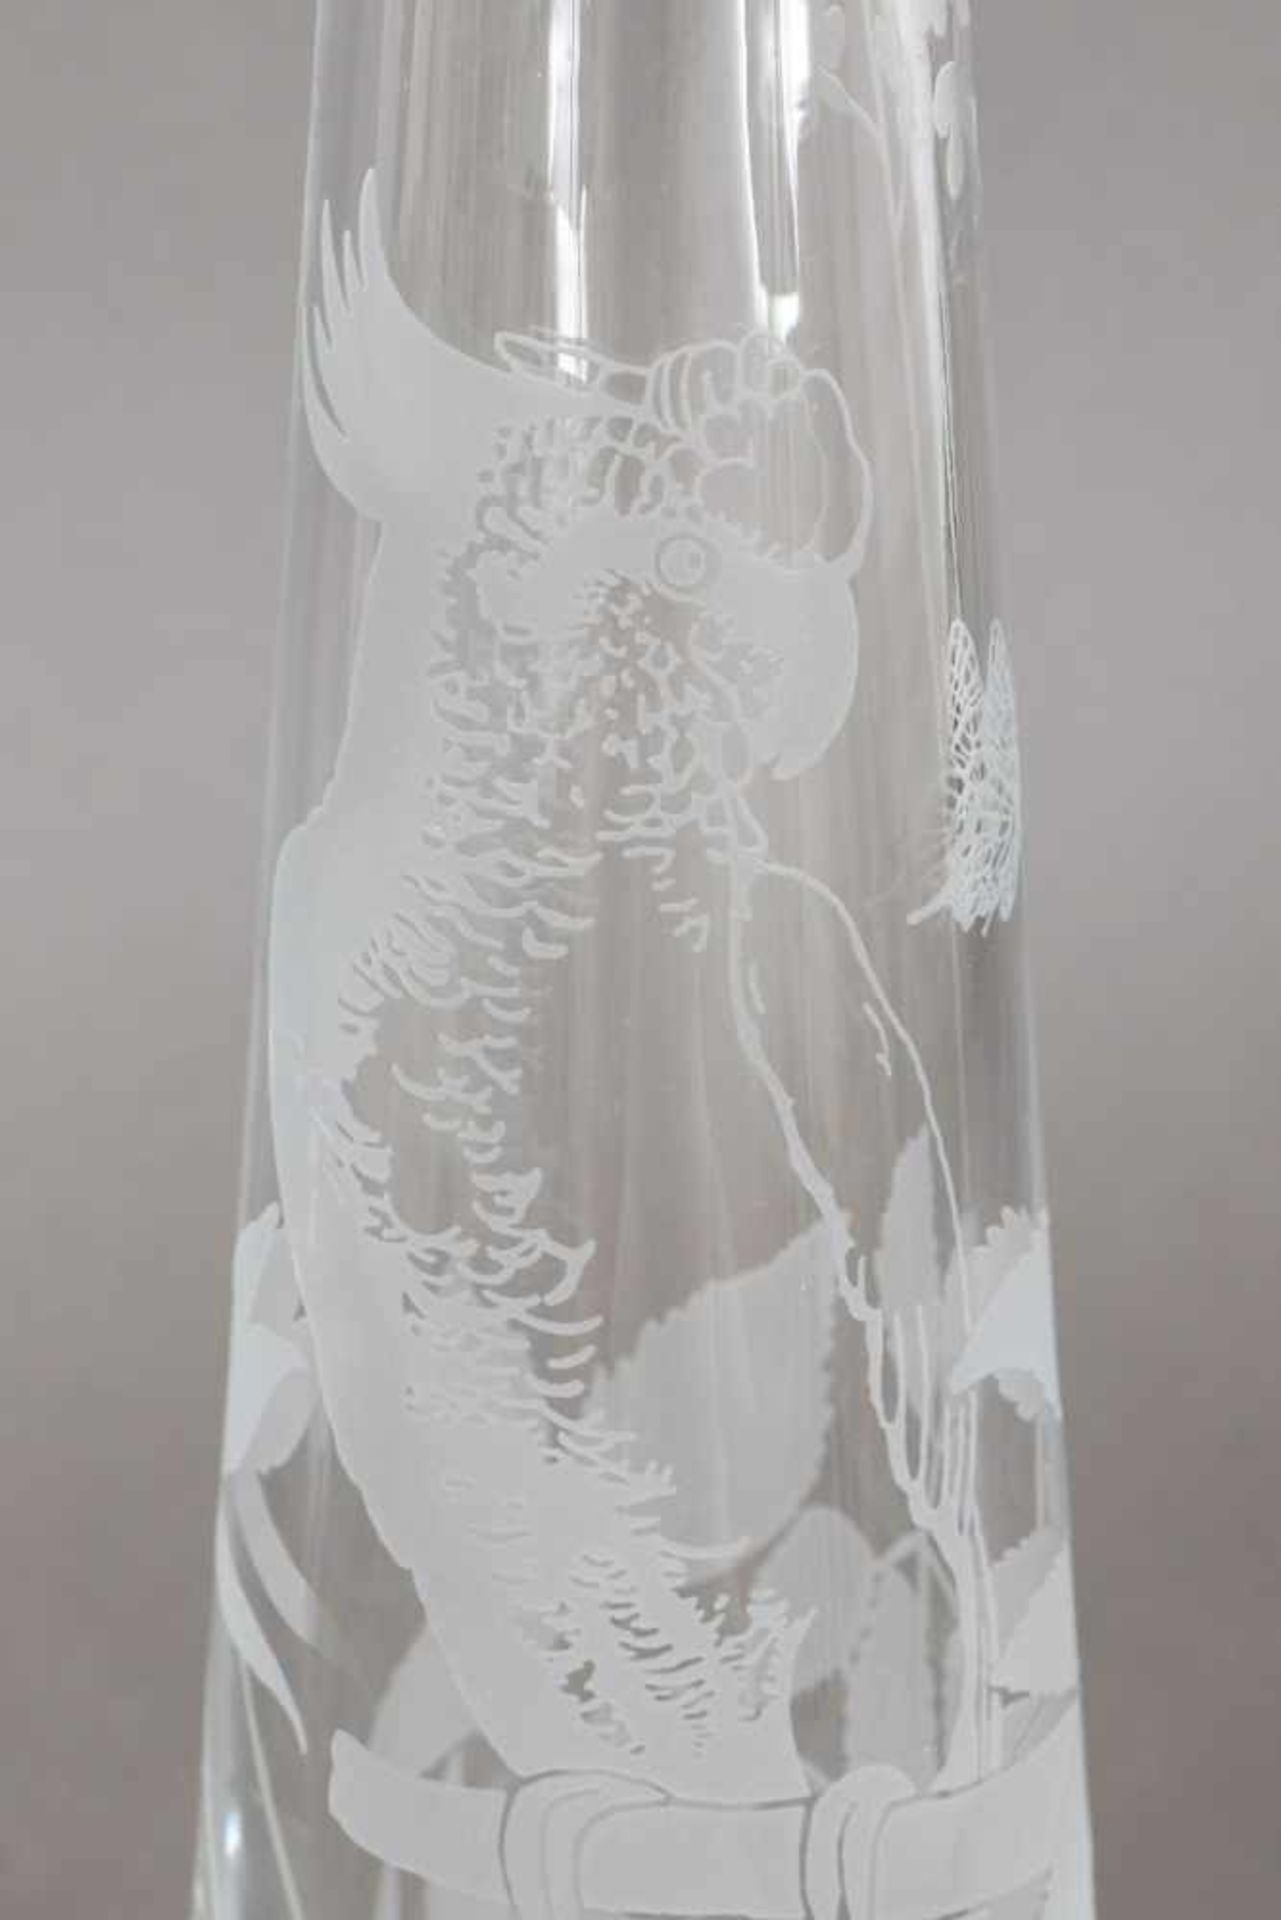 BACCARAT Stangenvase farbloses Glas, leicht kegelförmiger Korpus, Wandung umlaufend mit geätztem - Bild 2 aus 4